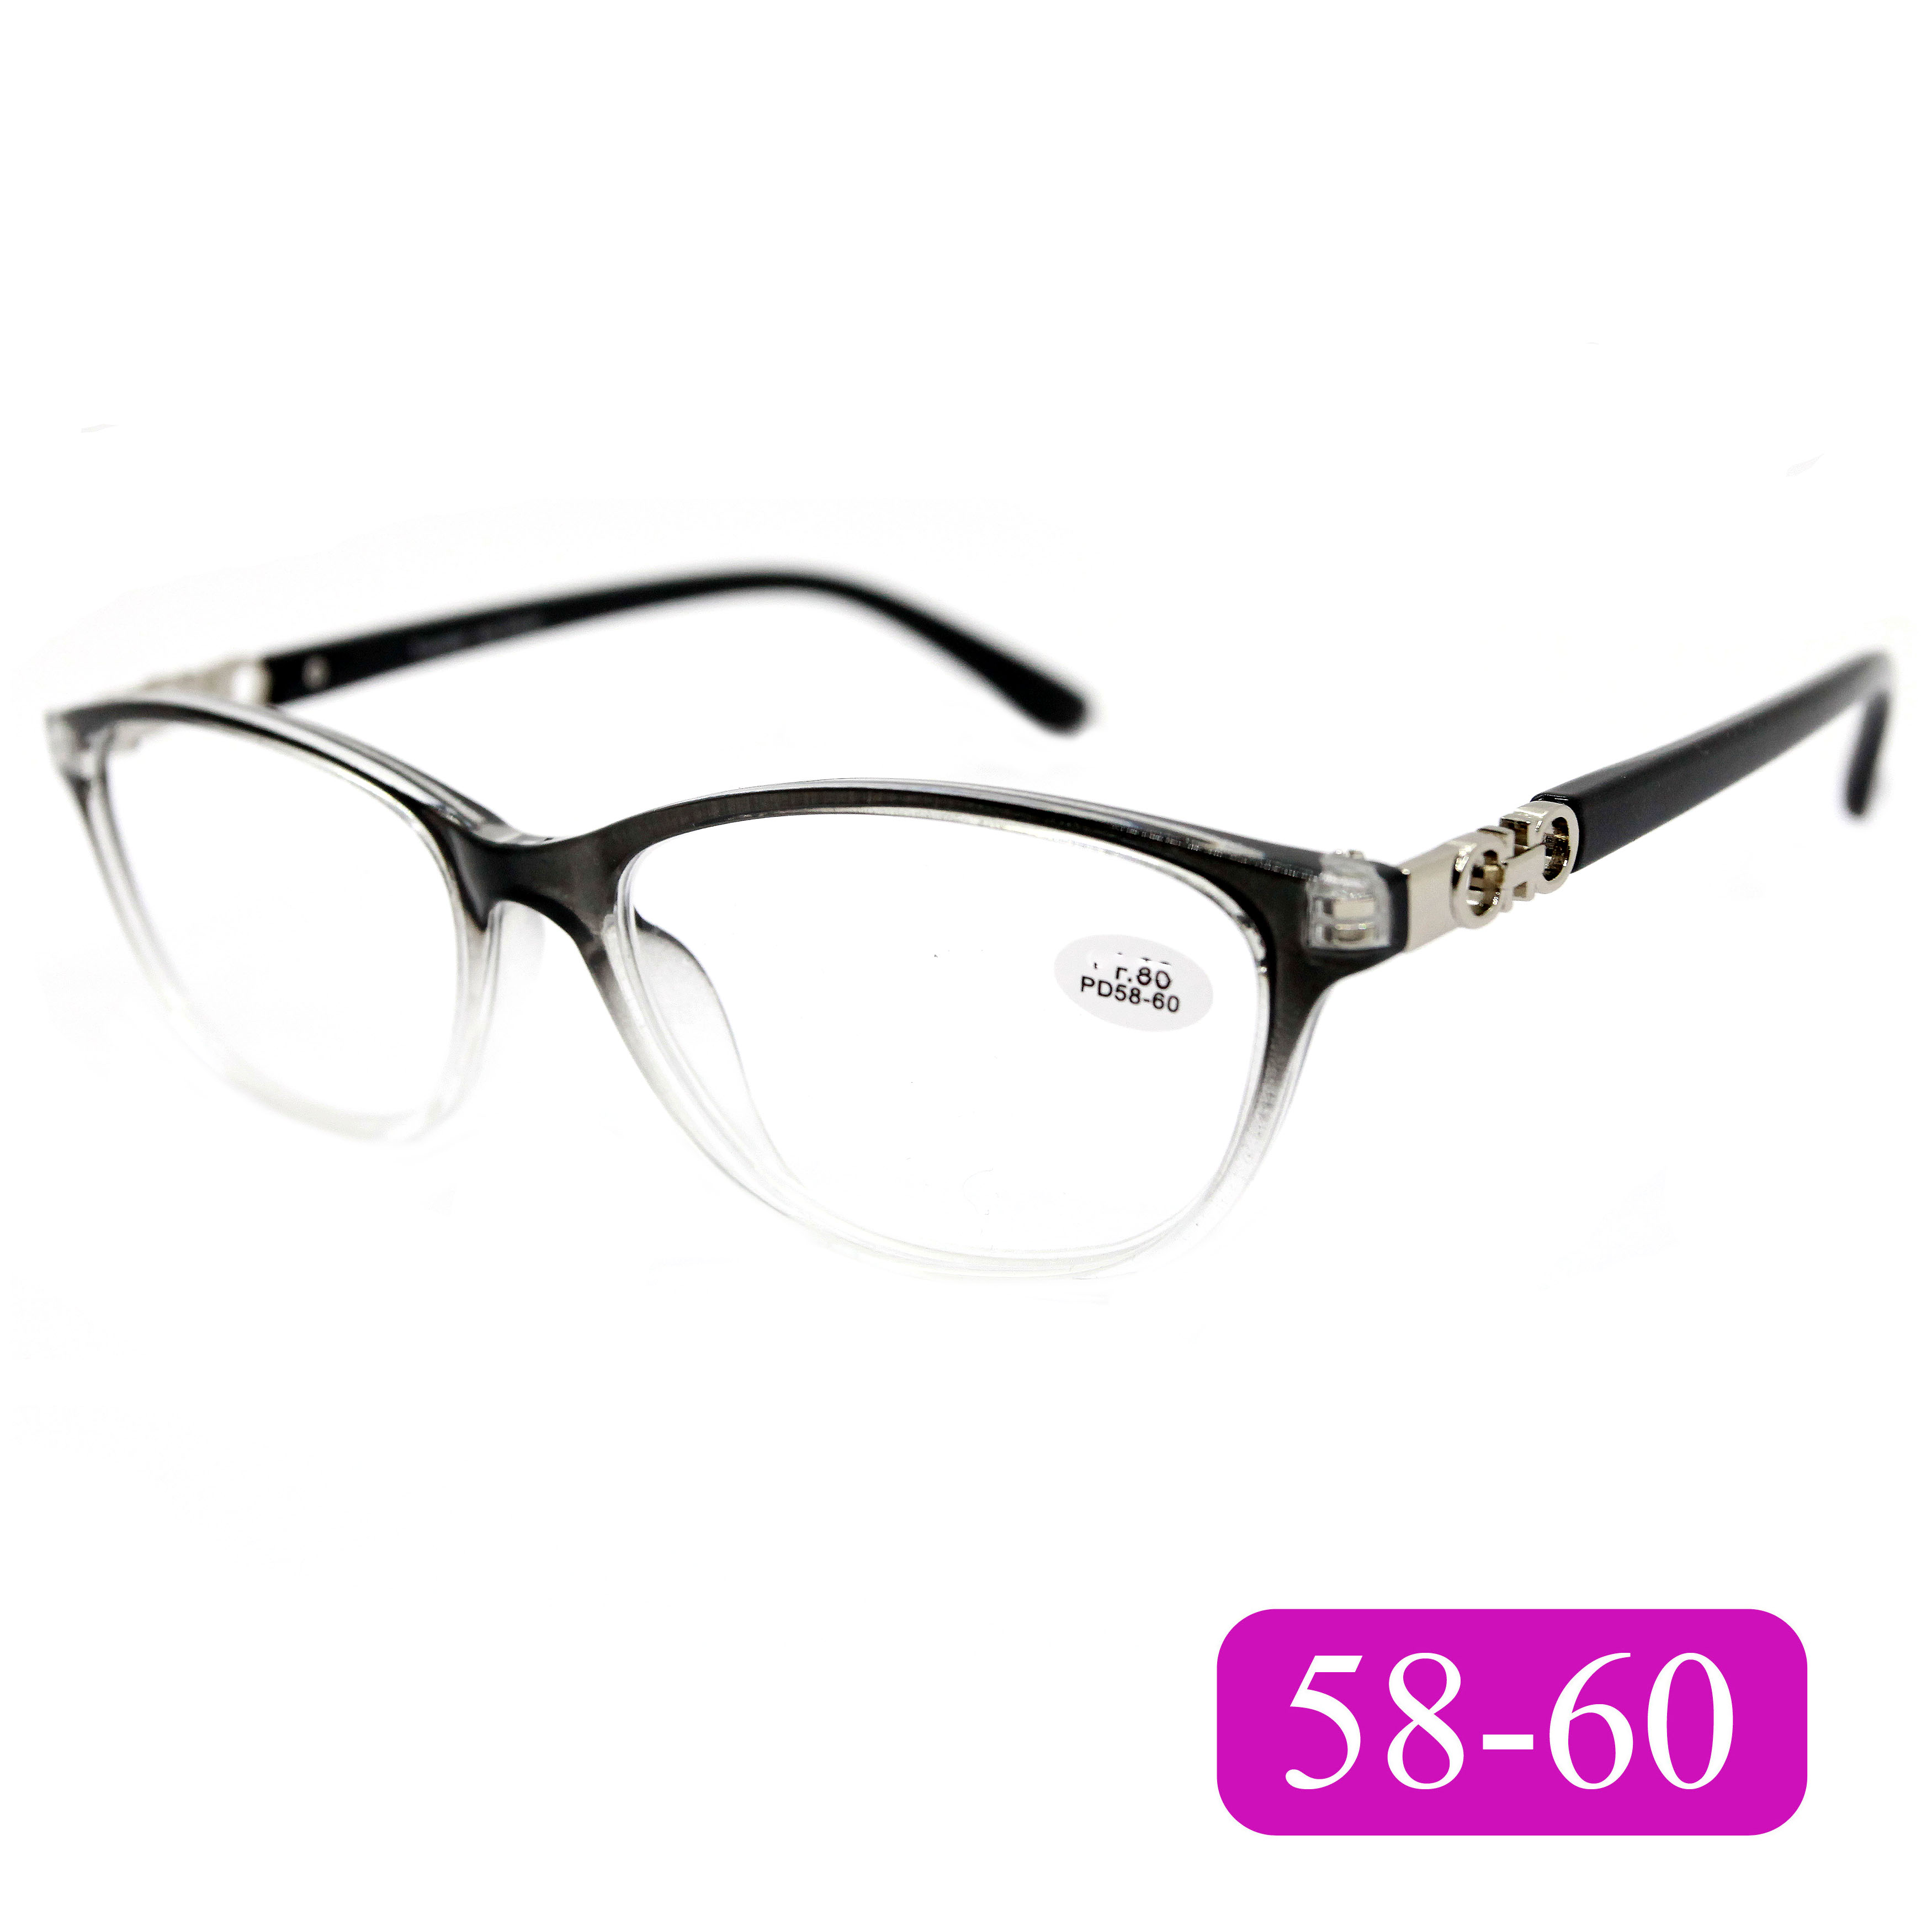 Готовые очки для зрения Traveler 7007 -4.00, без футляра, цвет серый, РЦ 58-60